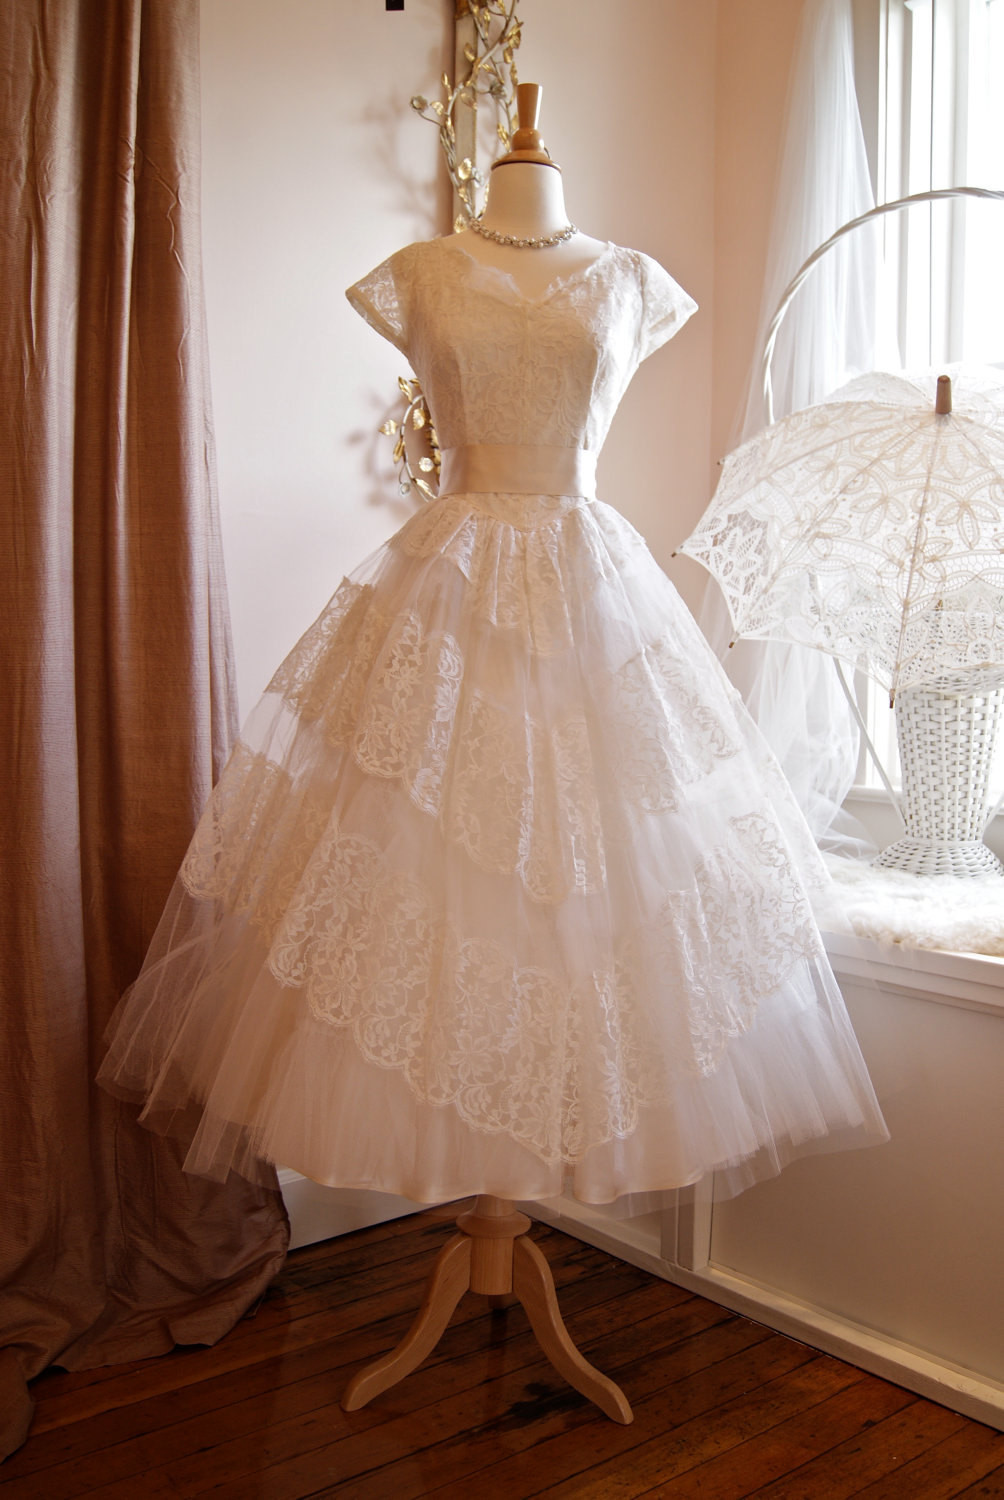 1950s Vintage Wedding Dresses
 Wedding Dress 50s Wedding Dress Vintage 1950s White Lace